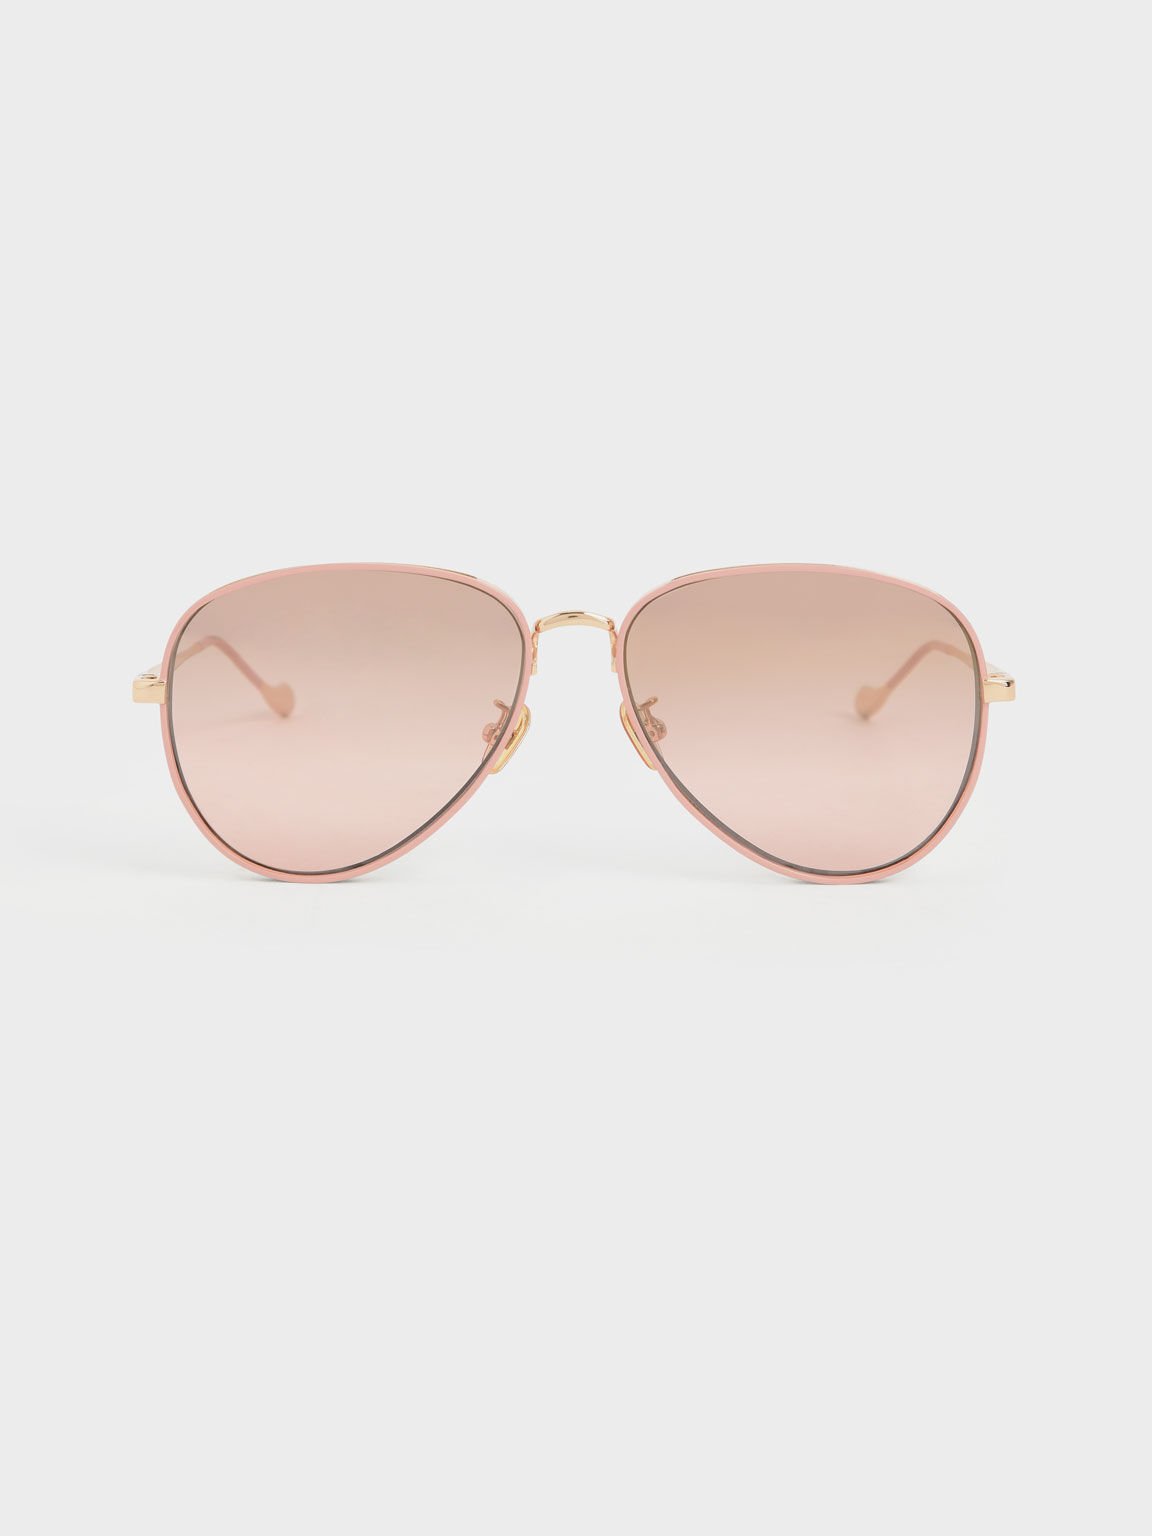 Tinted Aviator Sunglasses, Pink, hi-res